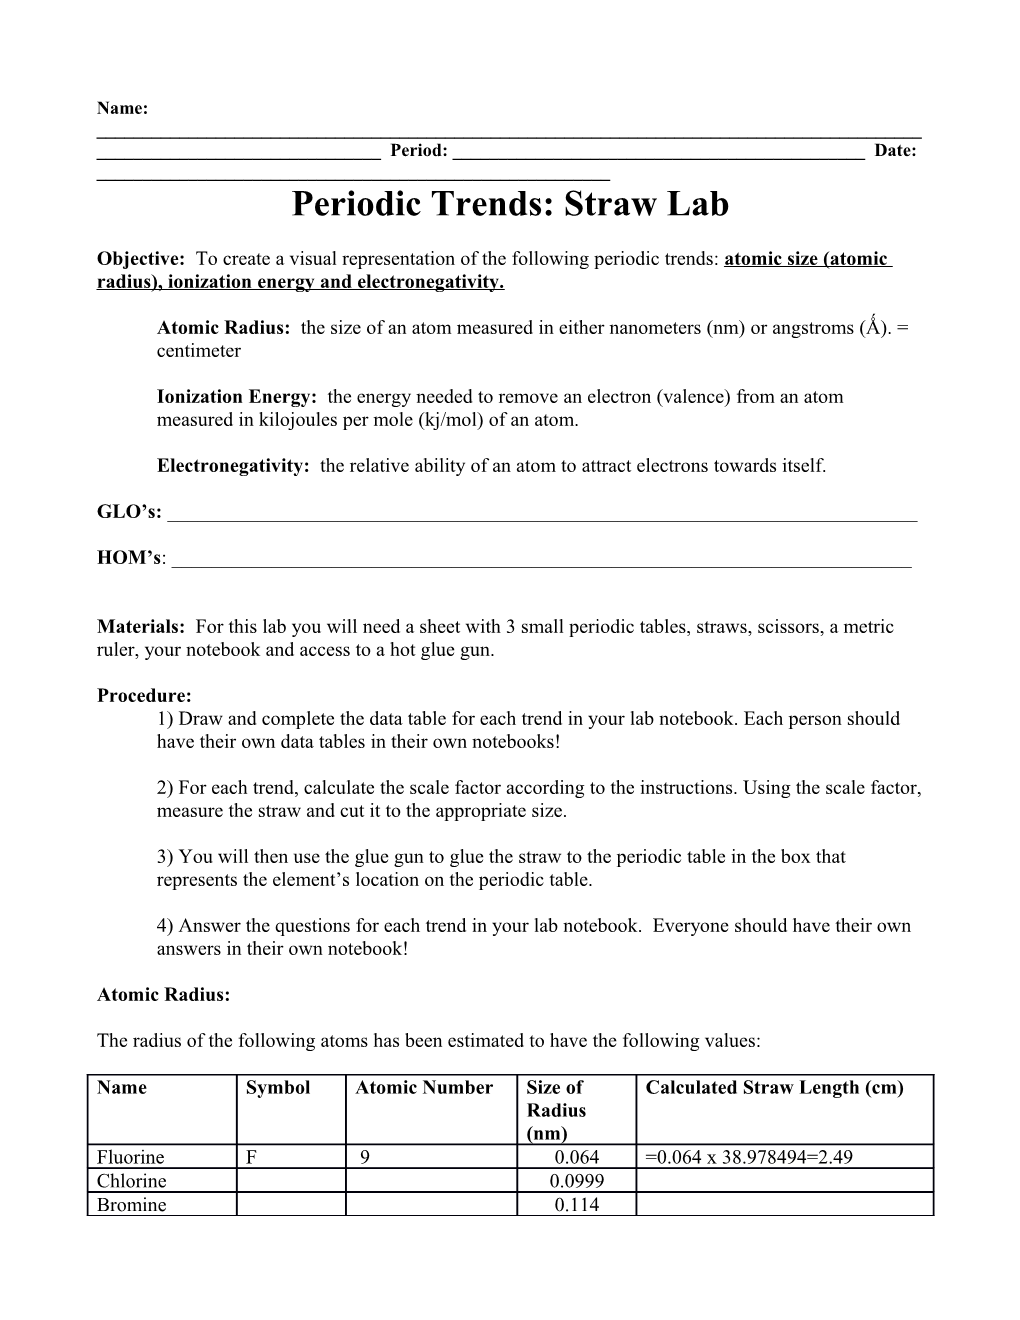 Periodic Trends: Straw Lab